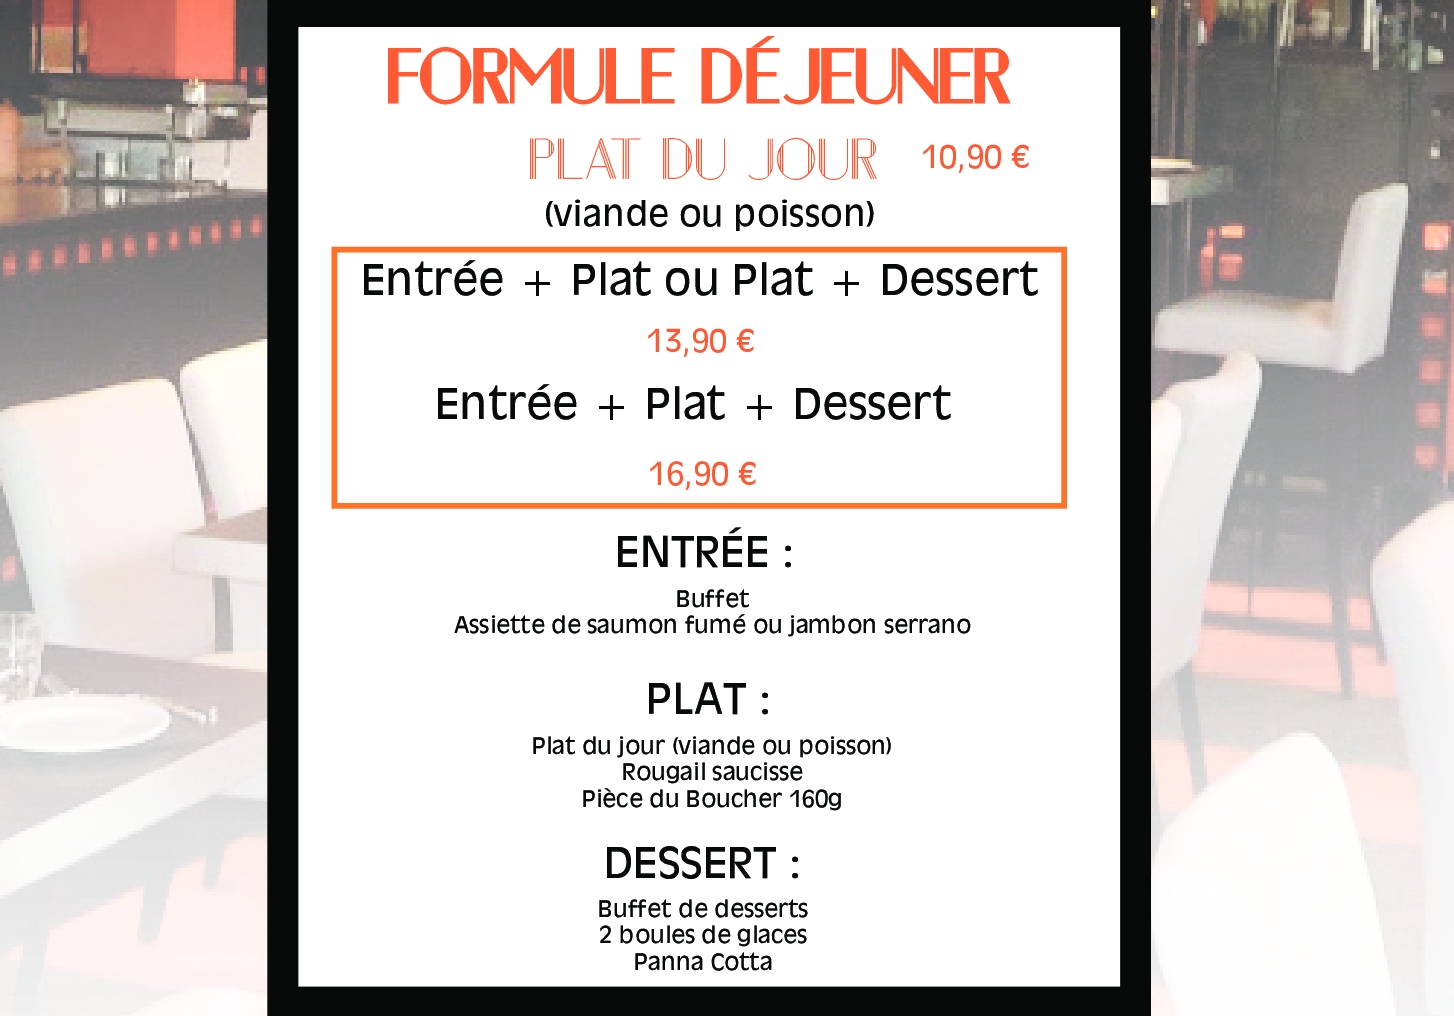 Formule dejeuner - Restaurant L'exception - Brasserie